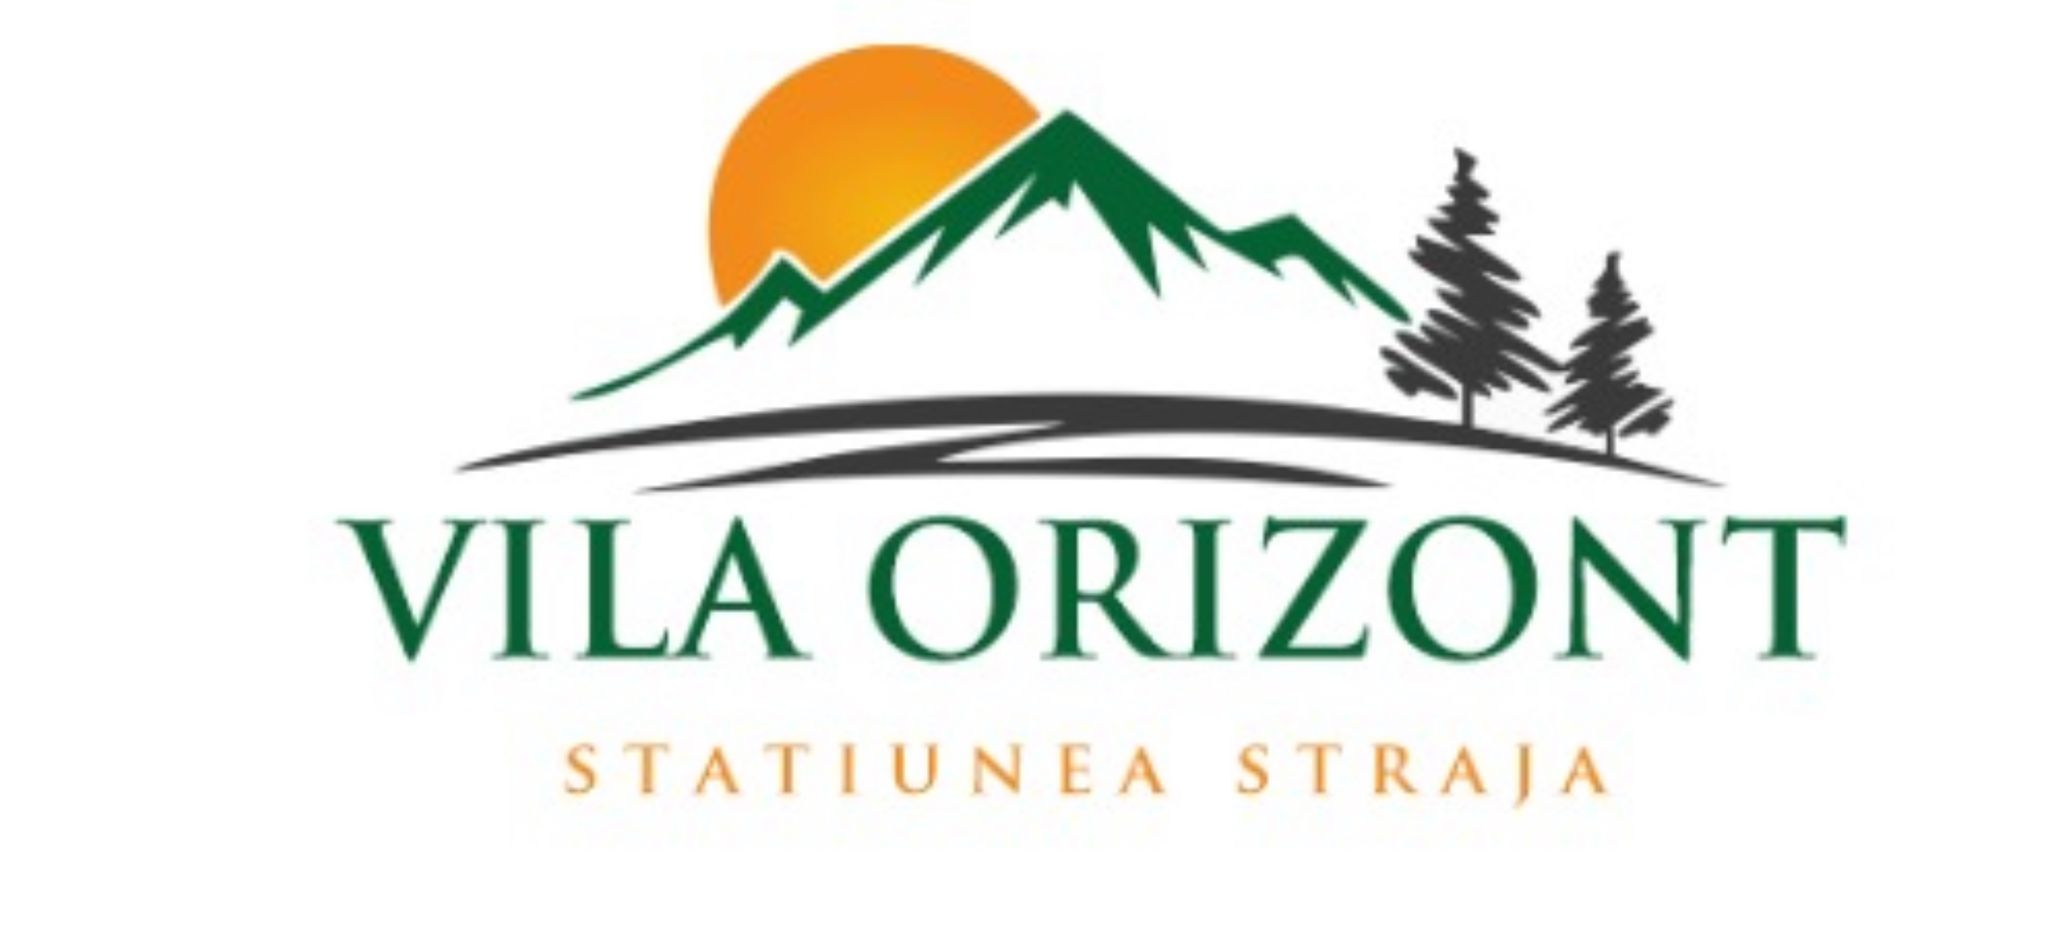 Vila Orizont Statiunea Straja Logo